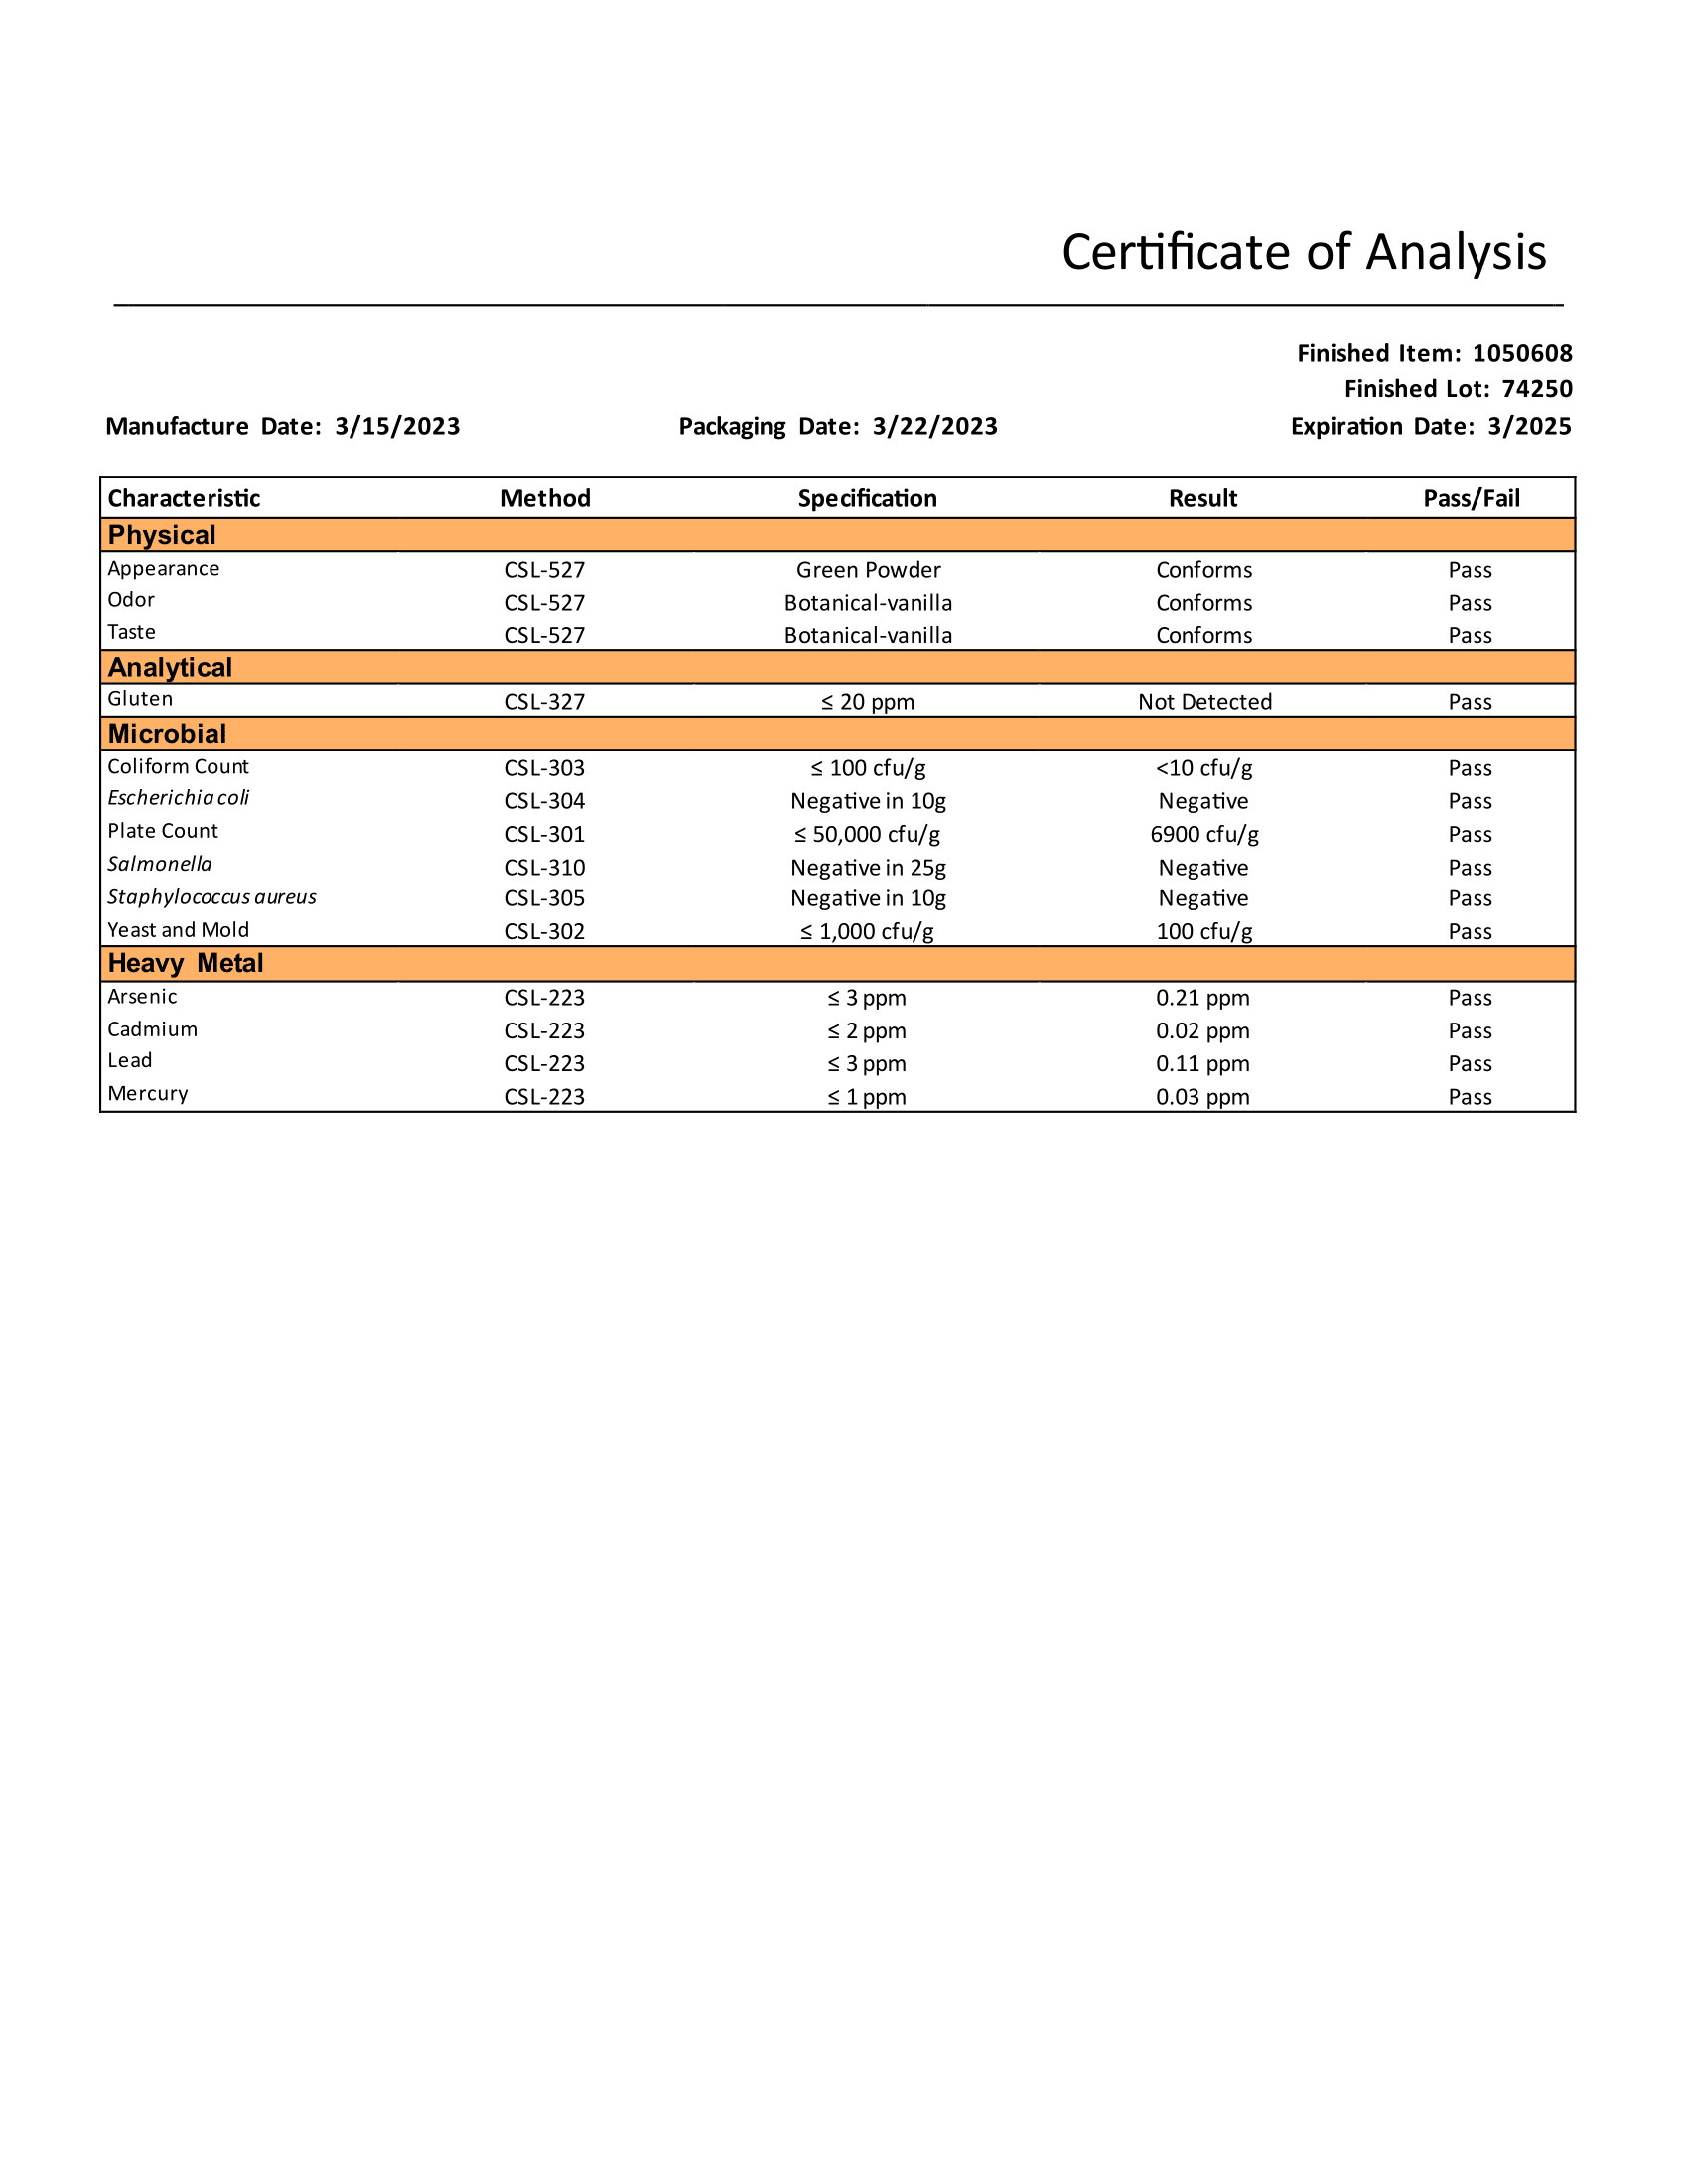 Genesis Lab Test Certificate Page 1